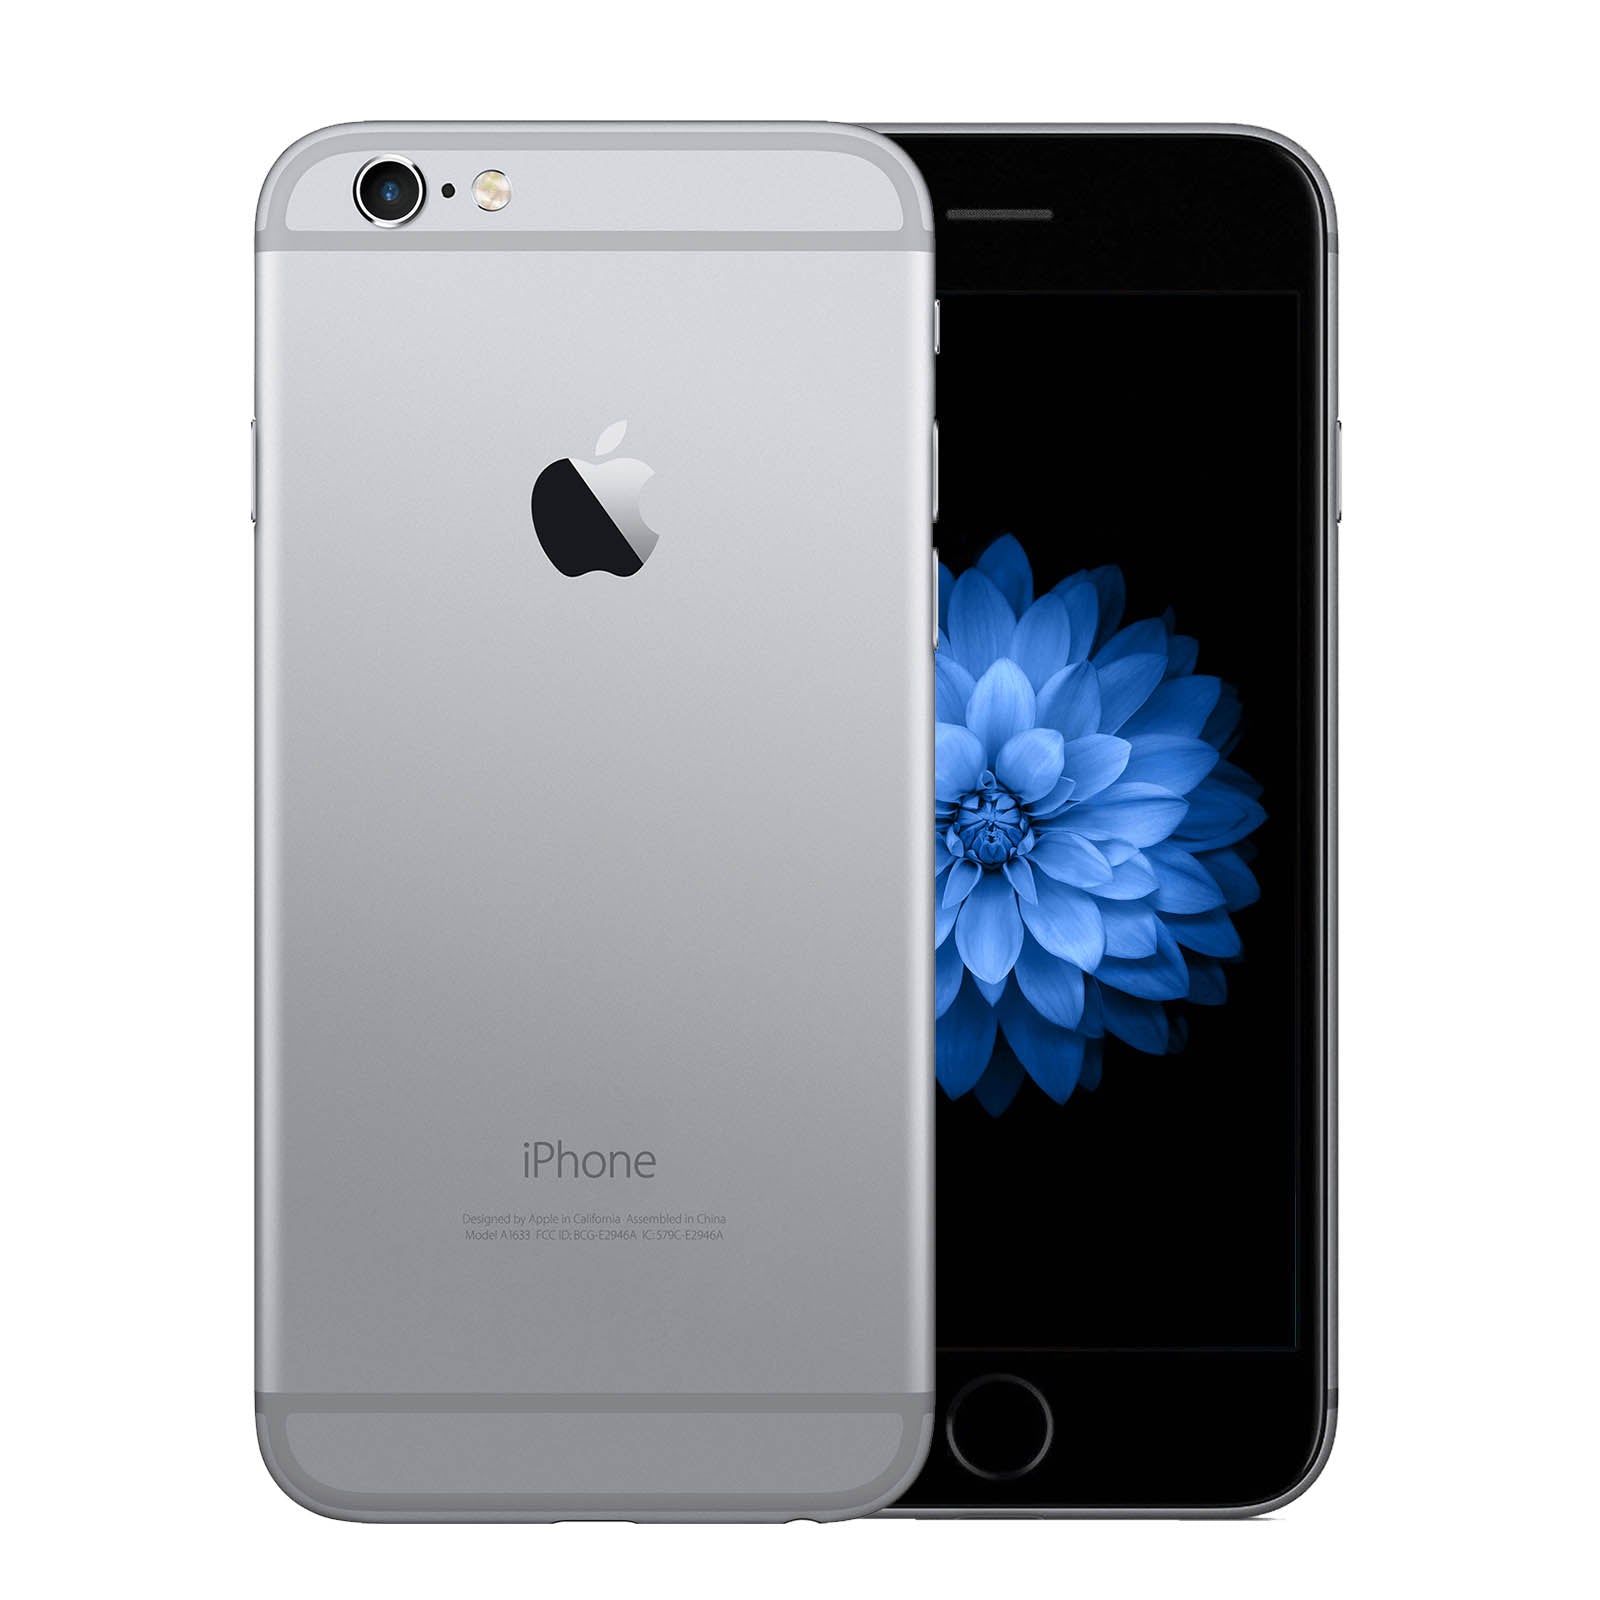 Apple iPhone 6 128GB Space Grey Very Good - Unlocked